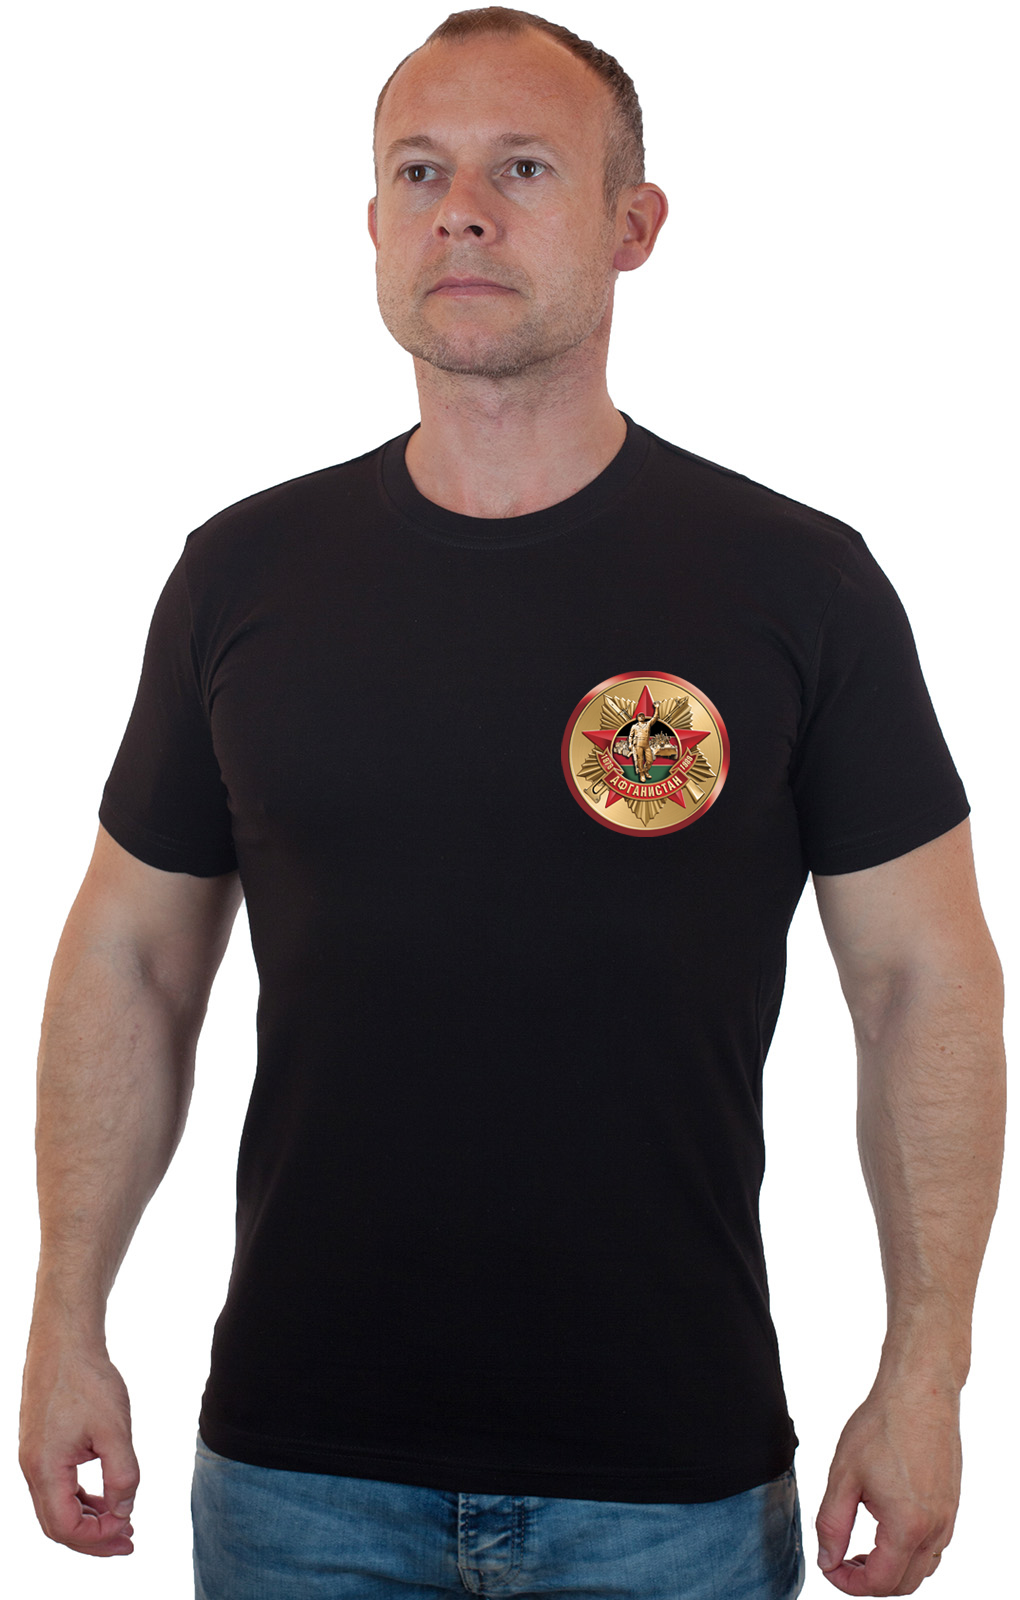 Мужская черная футболка Афганистан 1979-1989. 